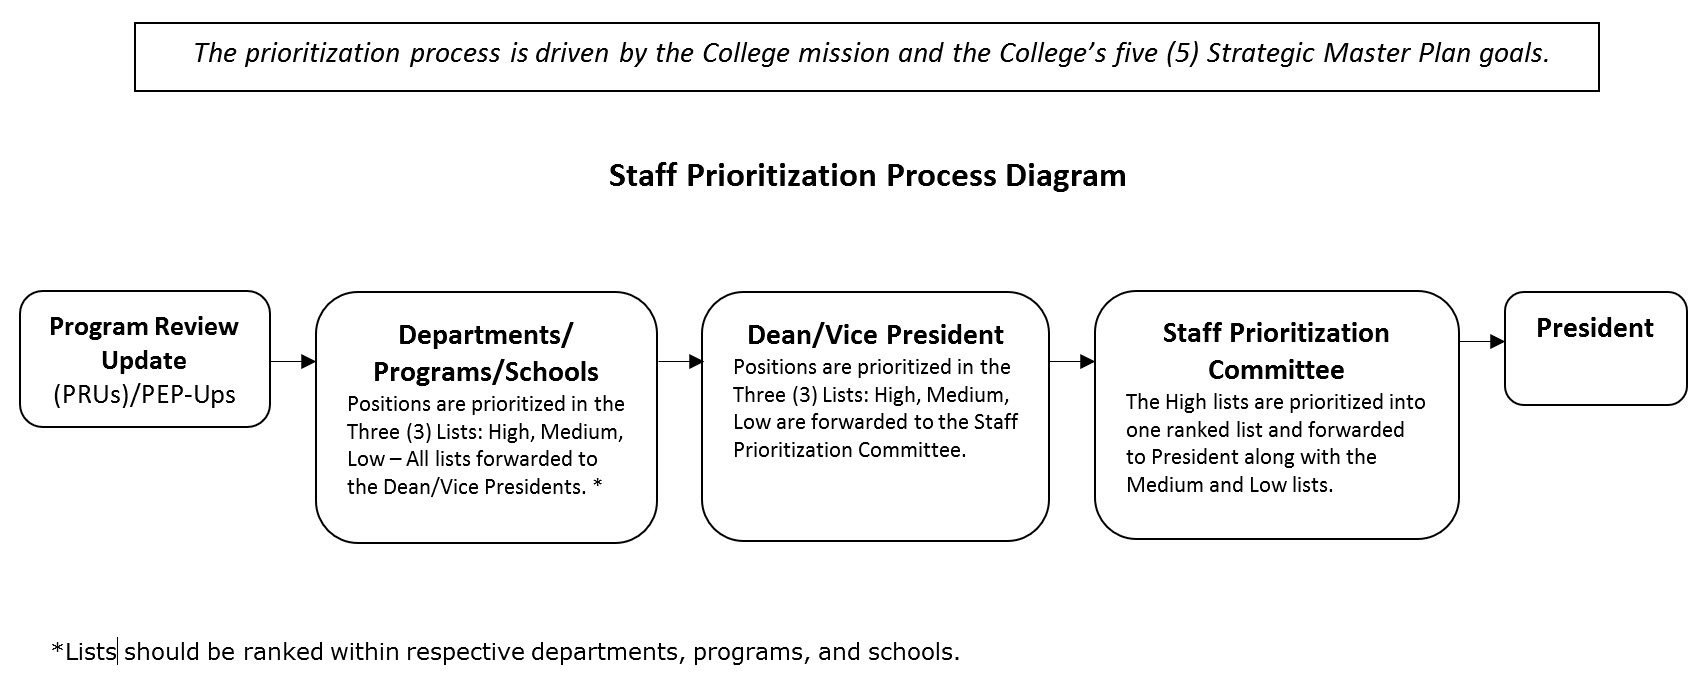 Staff Prioritization Process, full description provided in the previous text